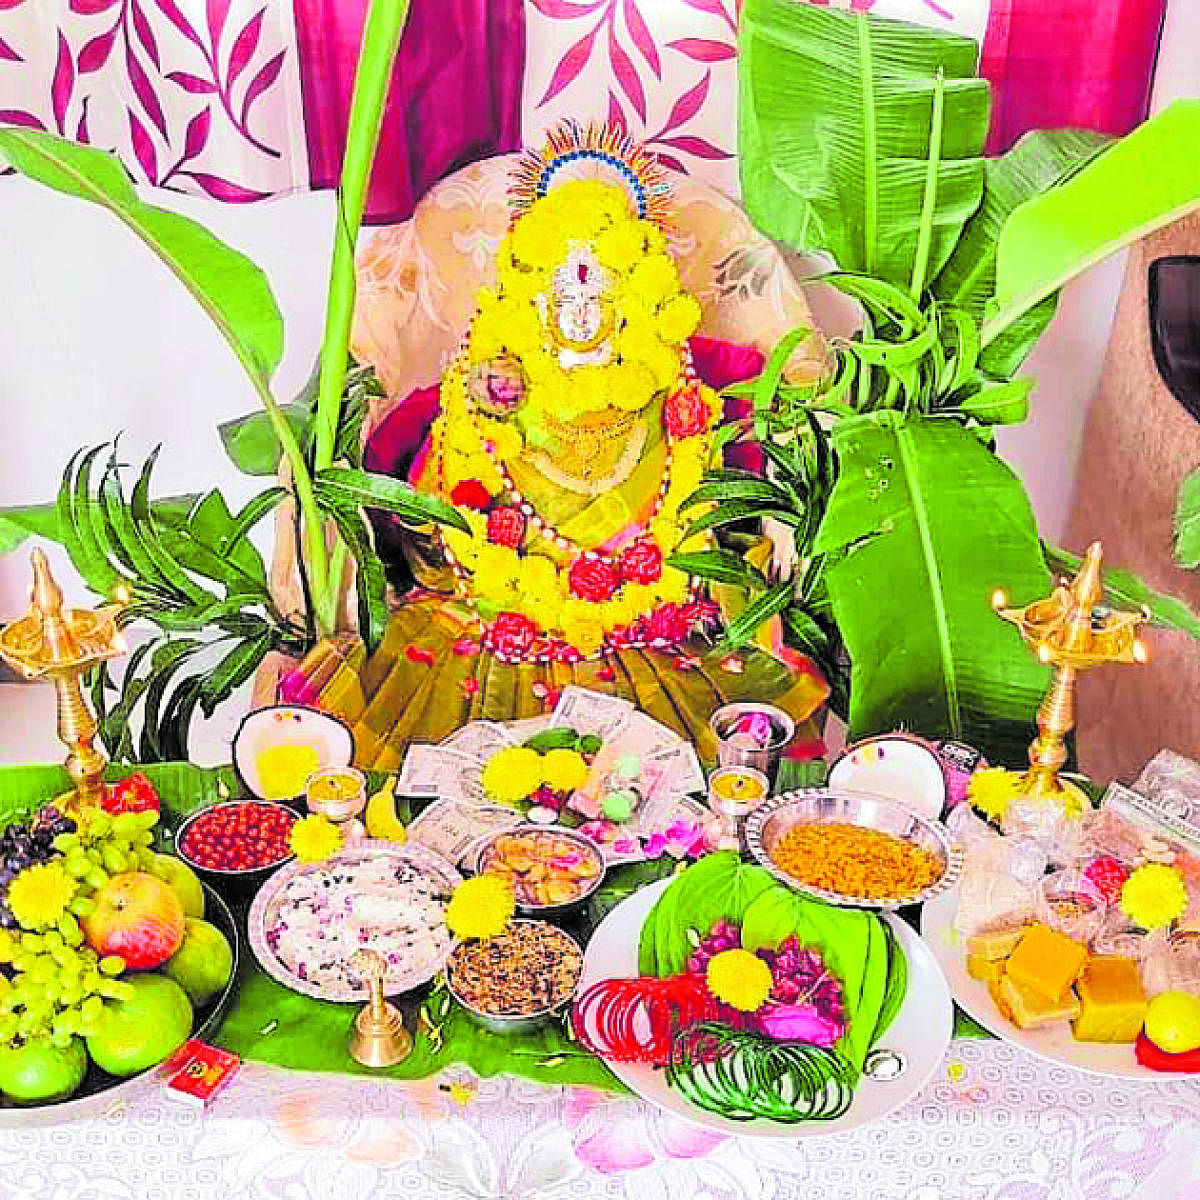 Varamahalakshmi festival was observed in Kushalnagar on Friday.